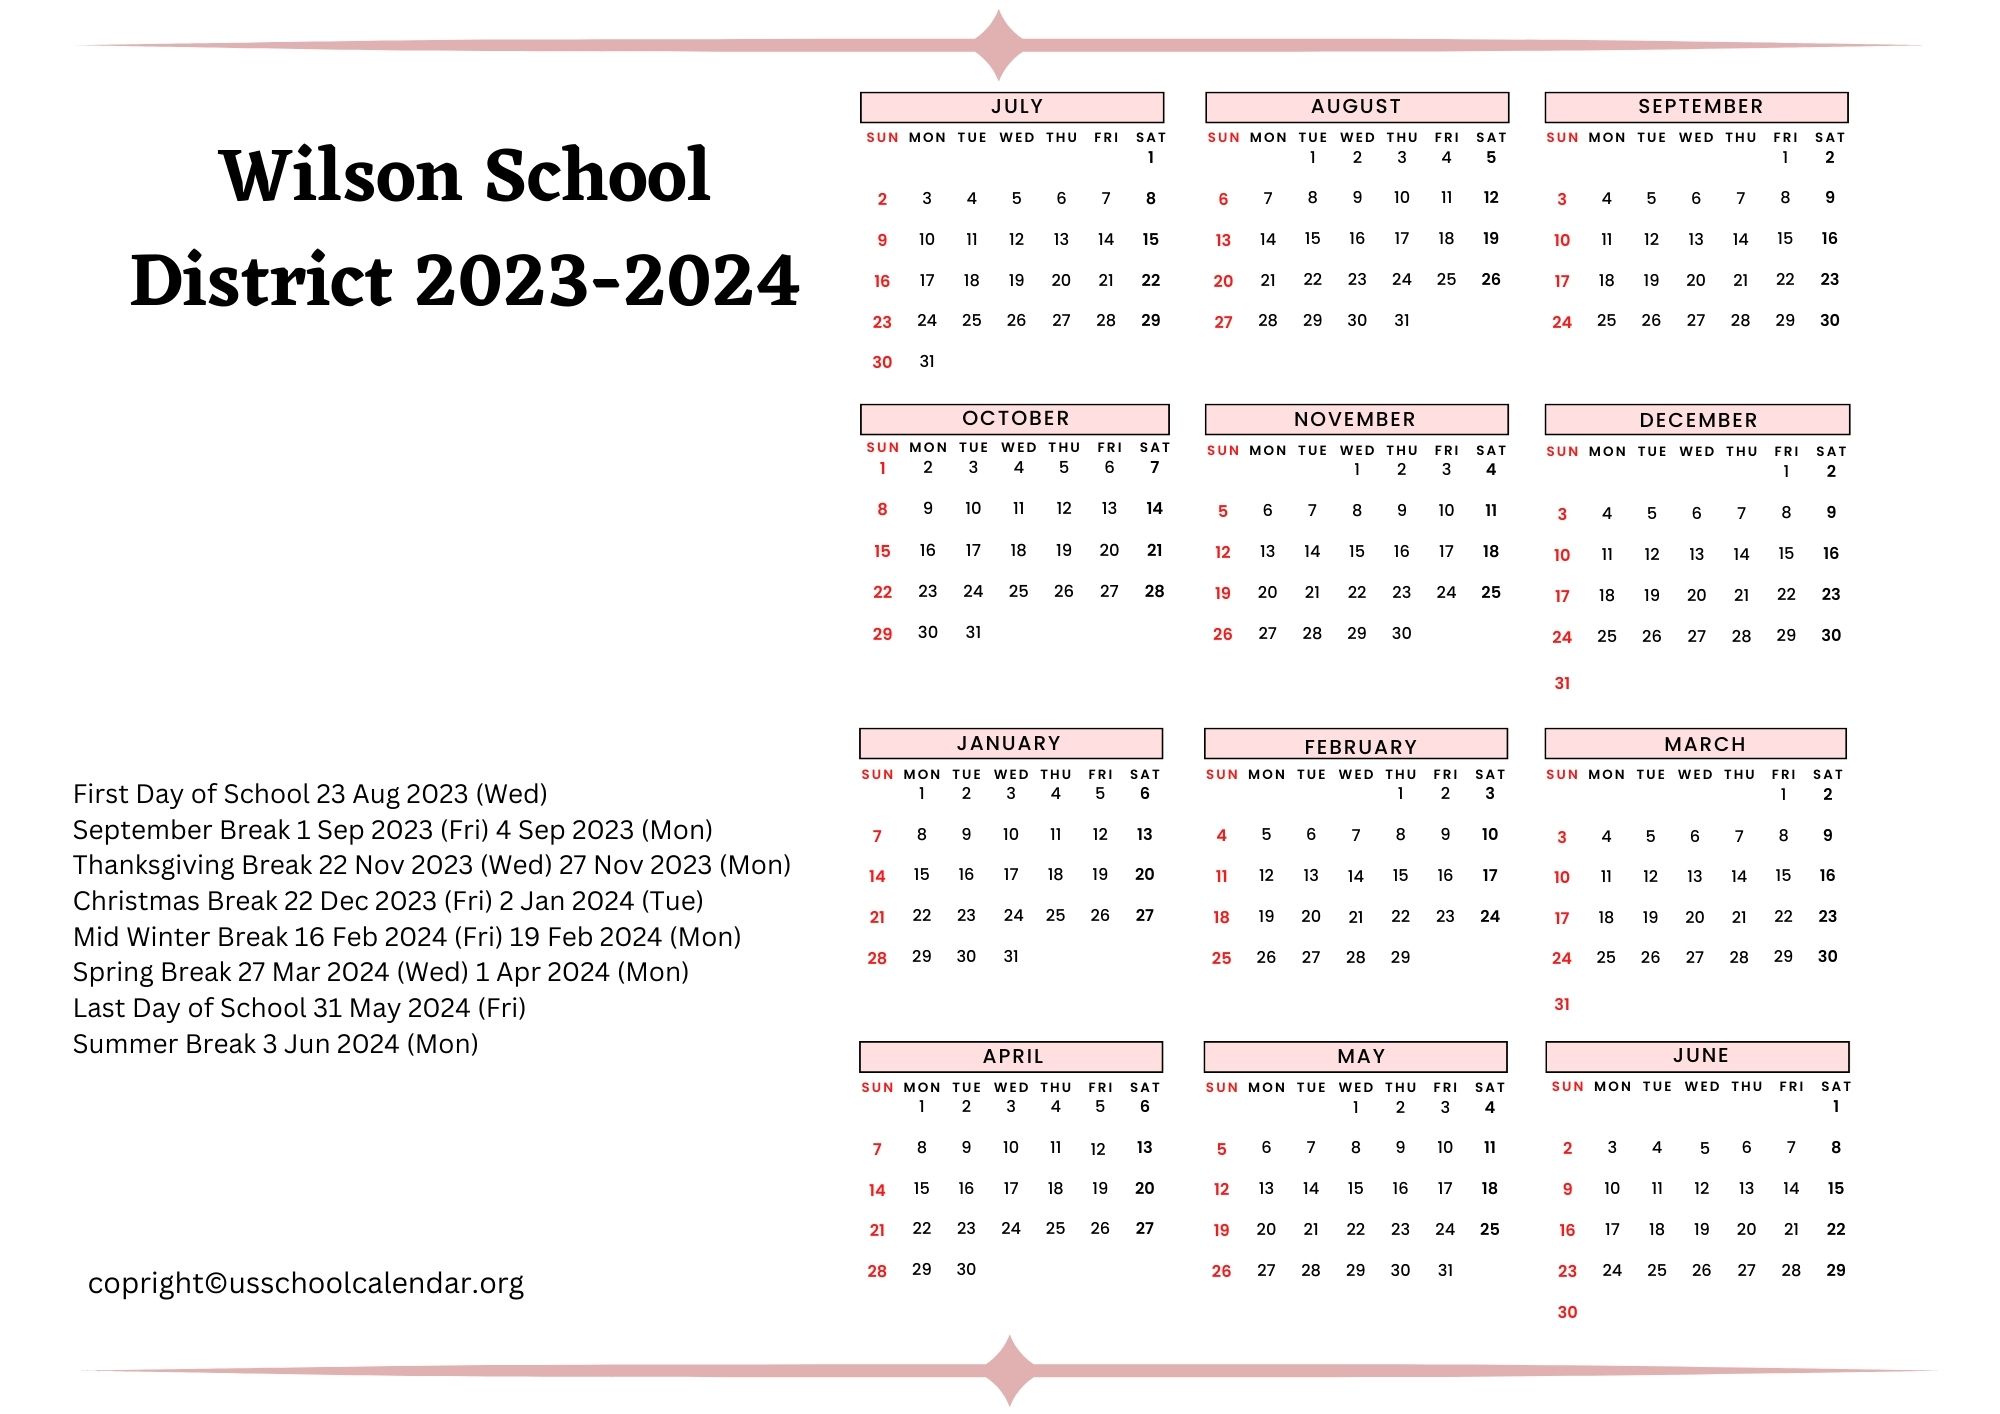 Wilson School District Calendar with Holidays 2023 2024